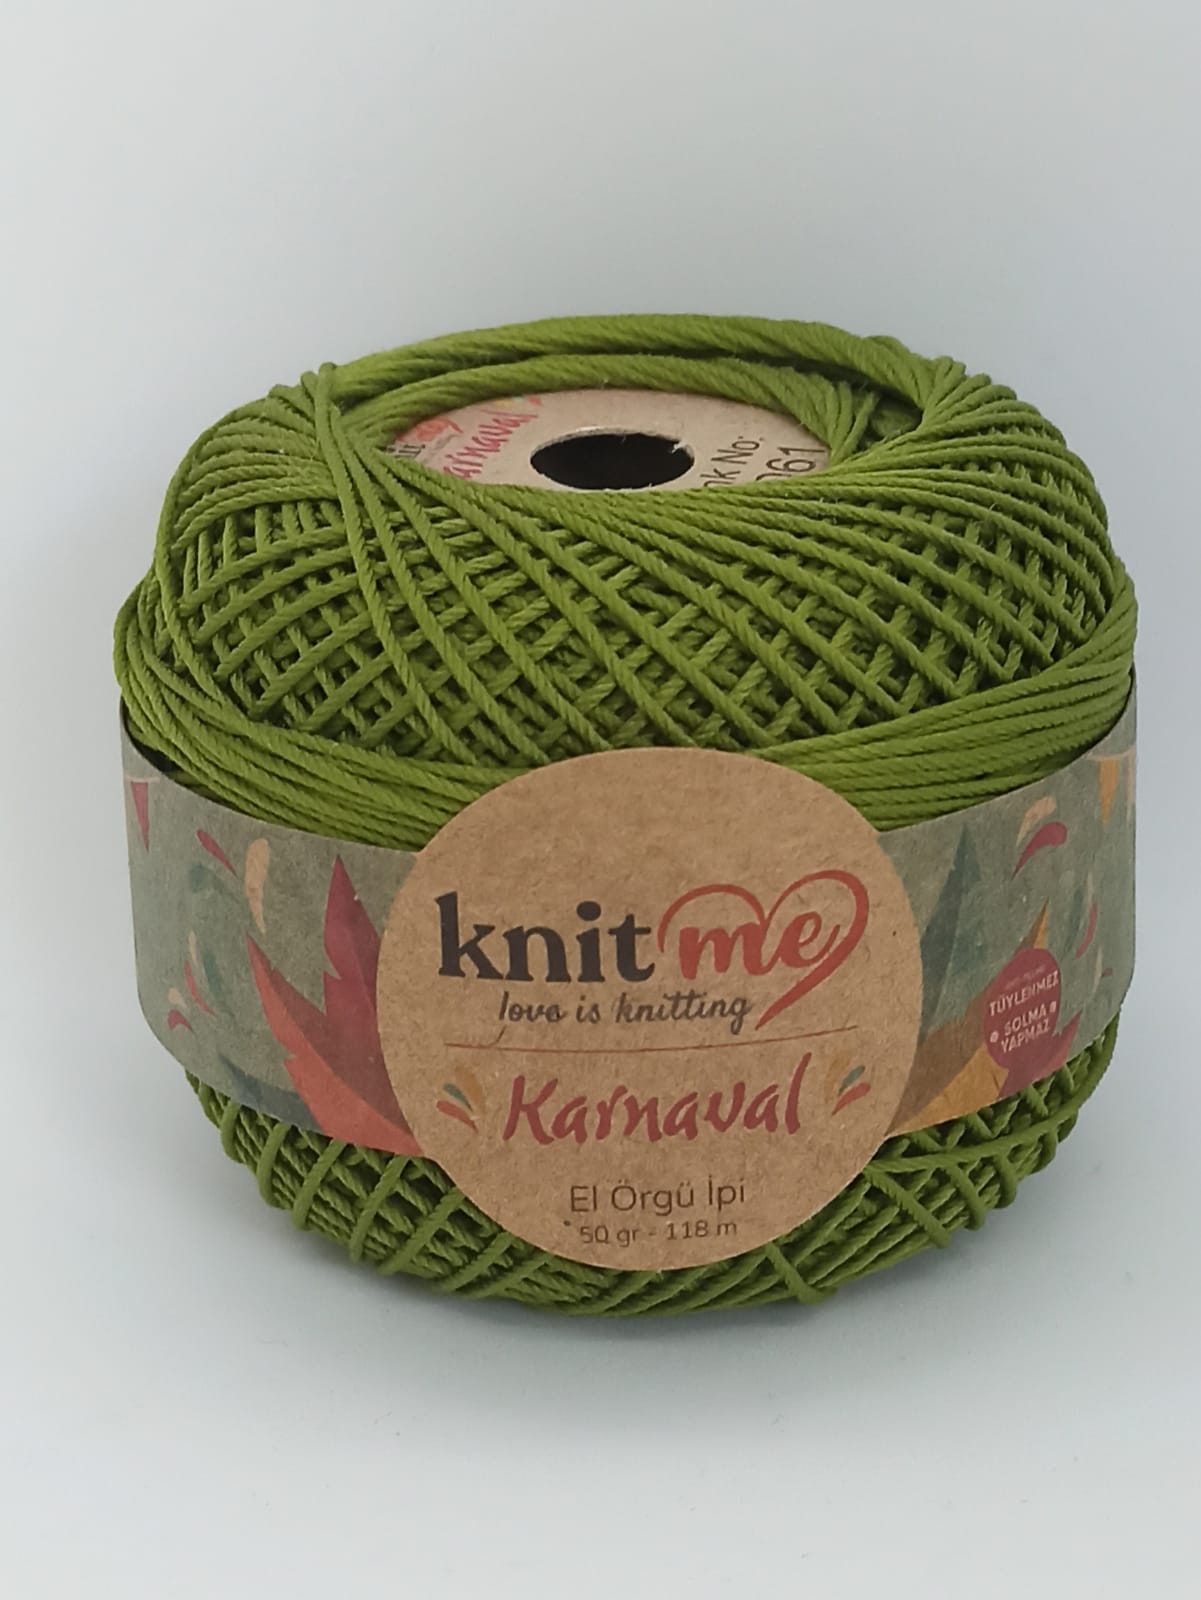 Knit Me Karnaval 00061